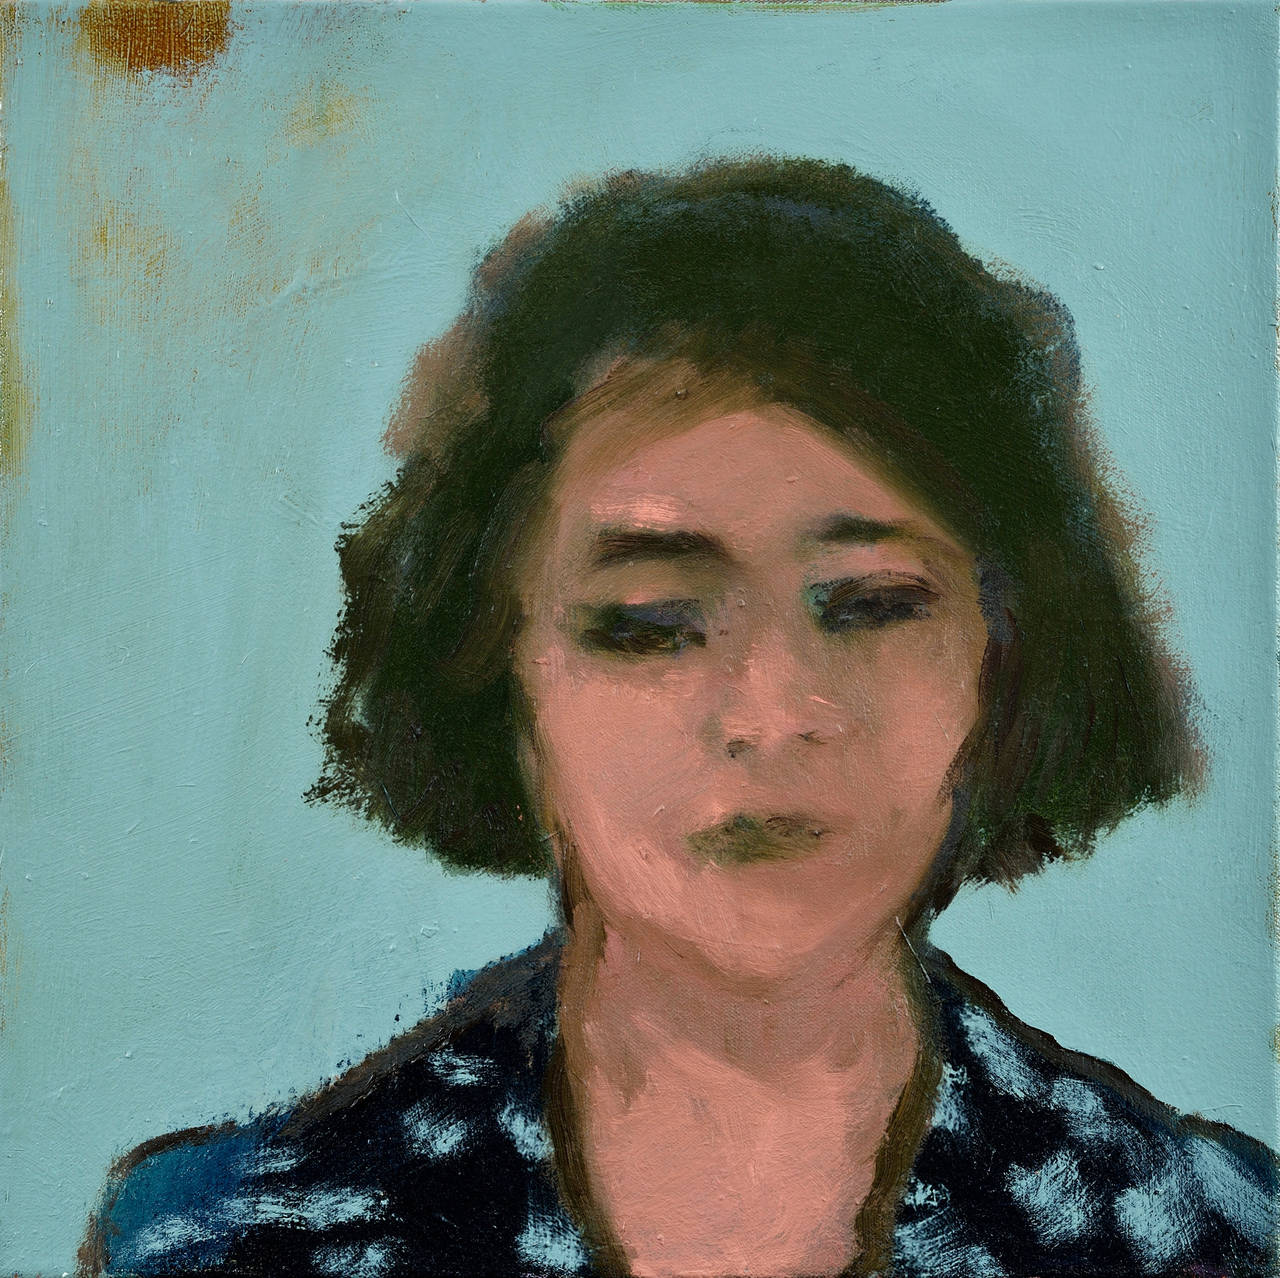 Woman with Print Dress - small teal blue, female portrait figurative still life